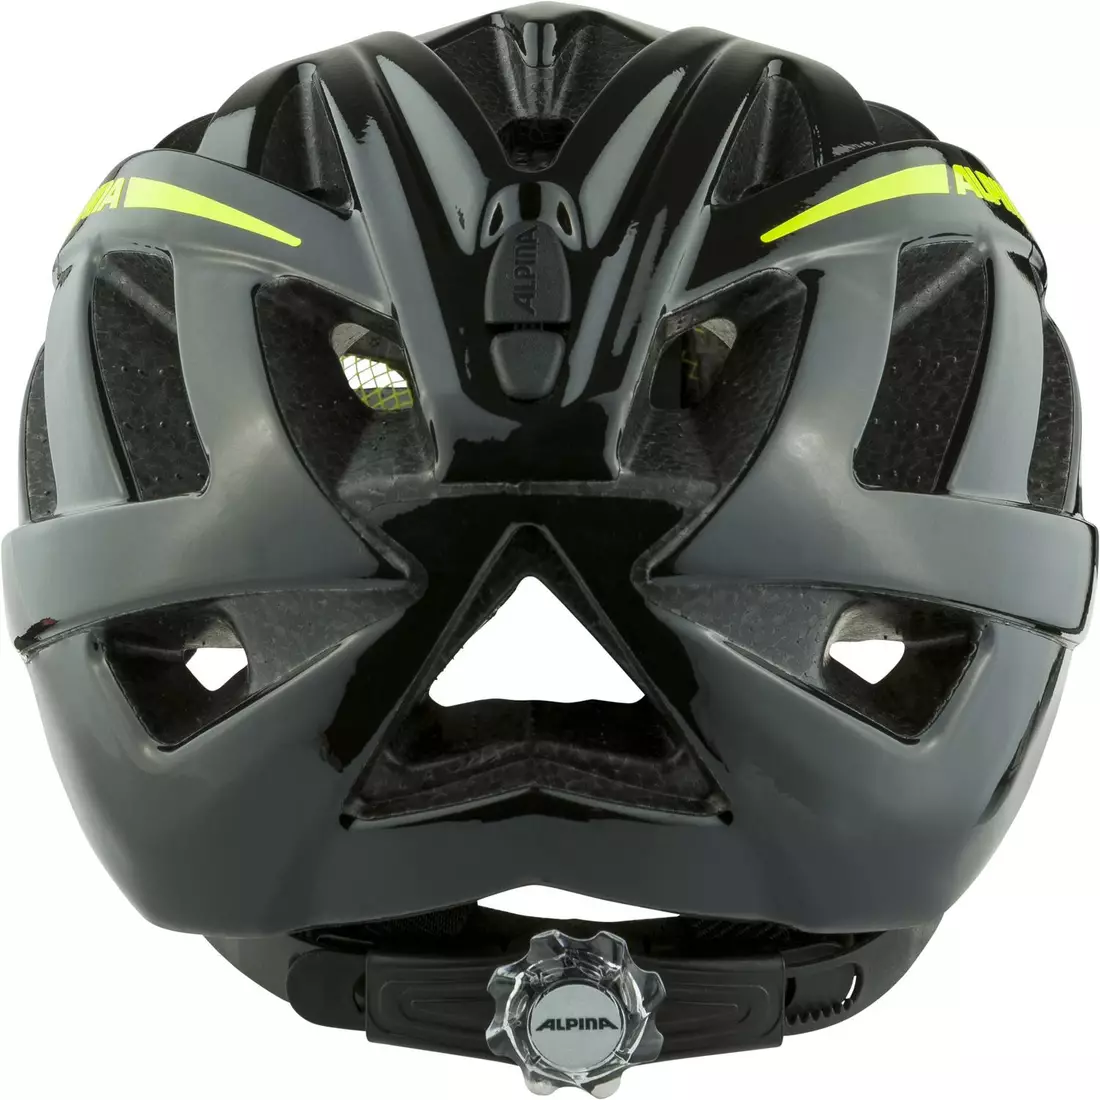 ALPINA PANOMA 2.0 MTB bicycle helmet, black-neon yellow gloss